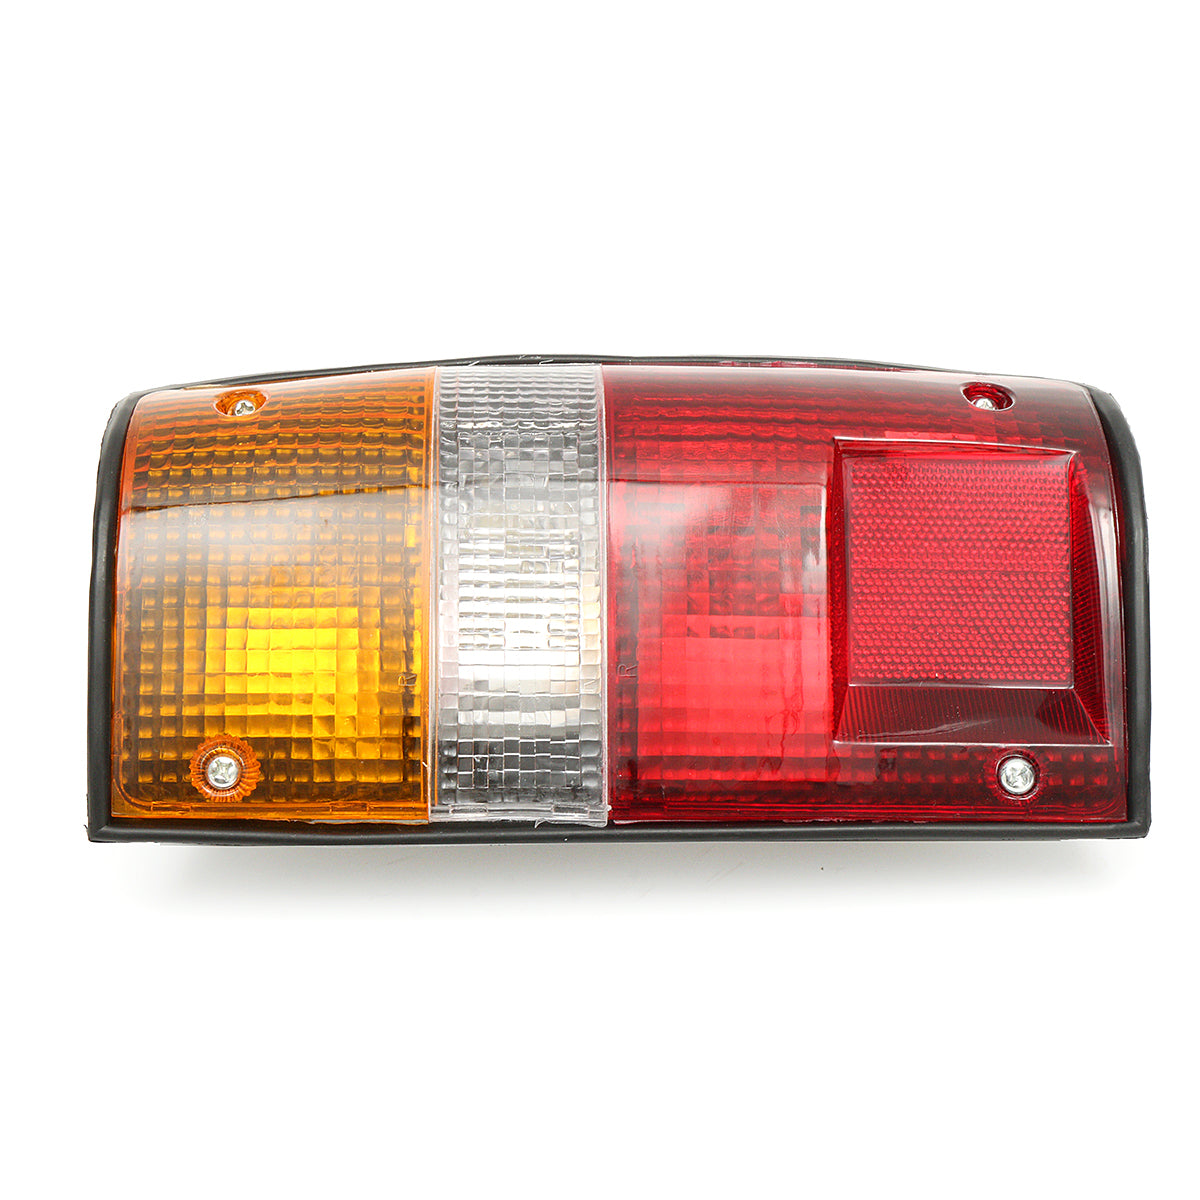 Maroon Car Rear Tail Lamp Turn Signal Brake Light Right For Toyoto Hilux Pick-Up 89-94 MK3 LN RN YN 2 4WD